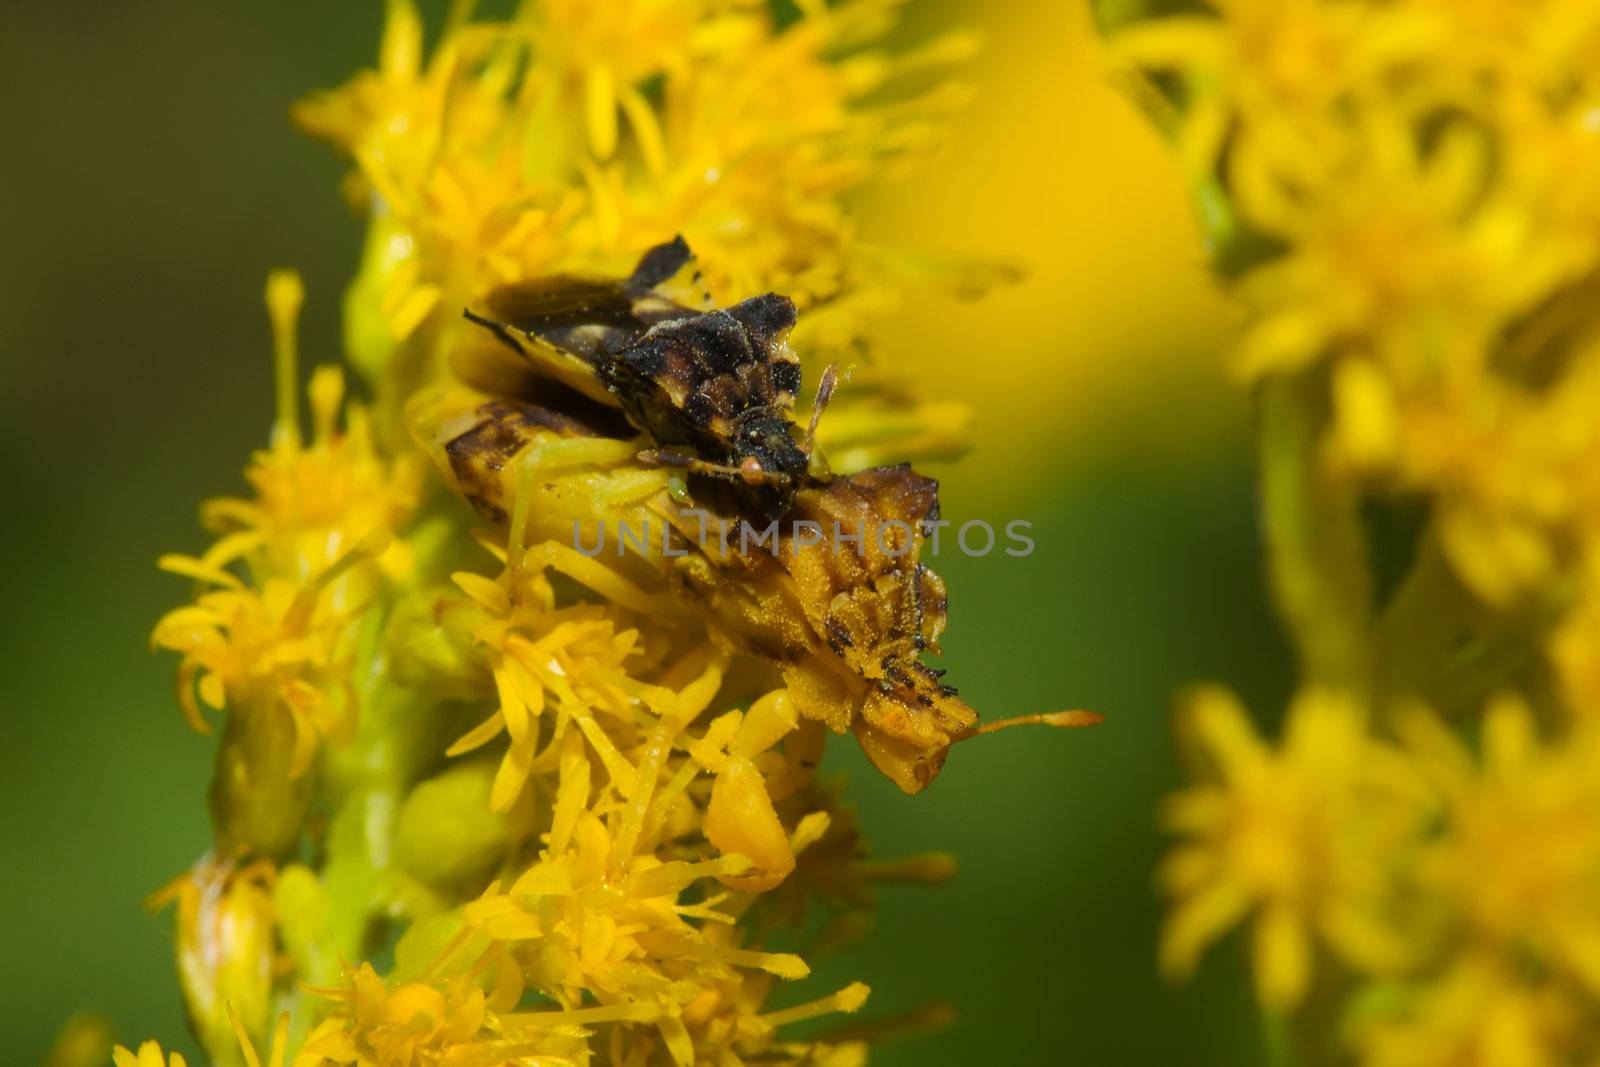 A pair of Ambush bugs (Phymata erosa) mating in goldenrod flowers.